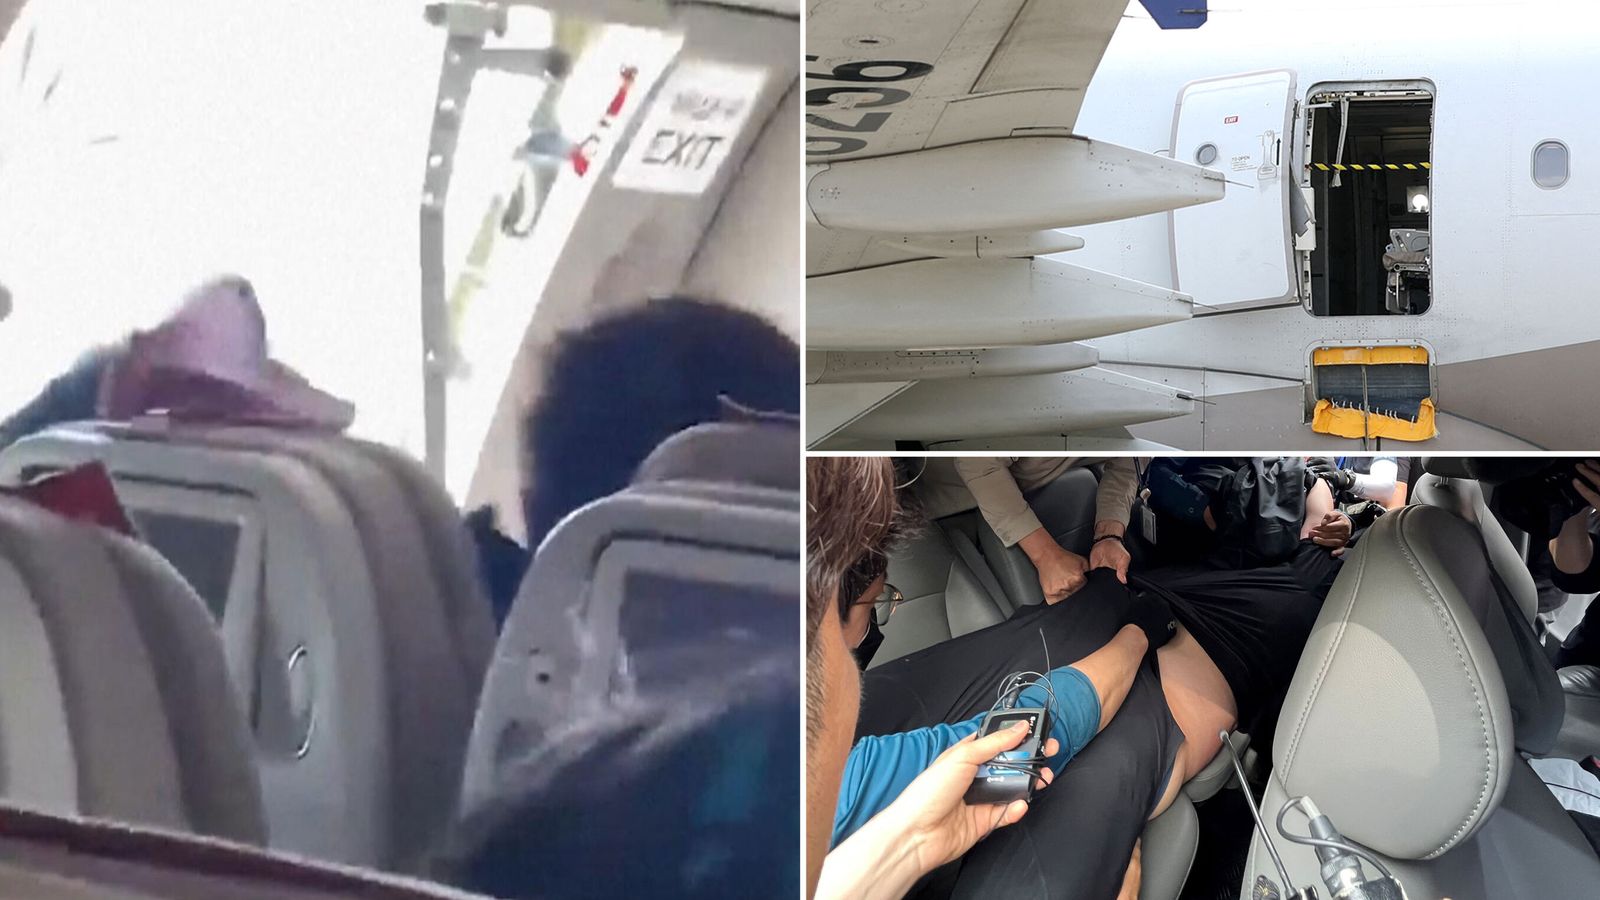 Passenger arrested after plane door opened mid-flight explains he felt 'uncomfortable'